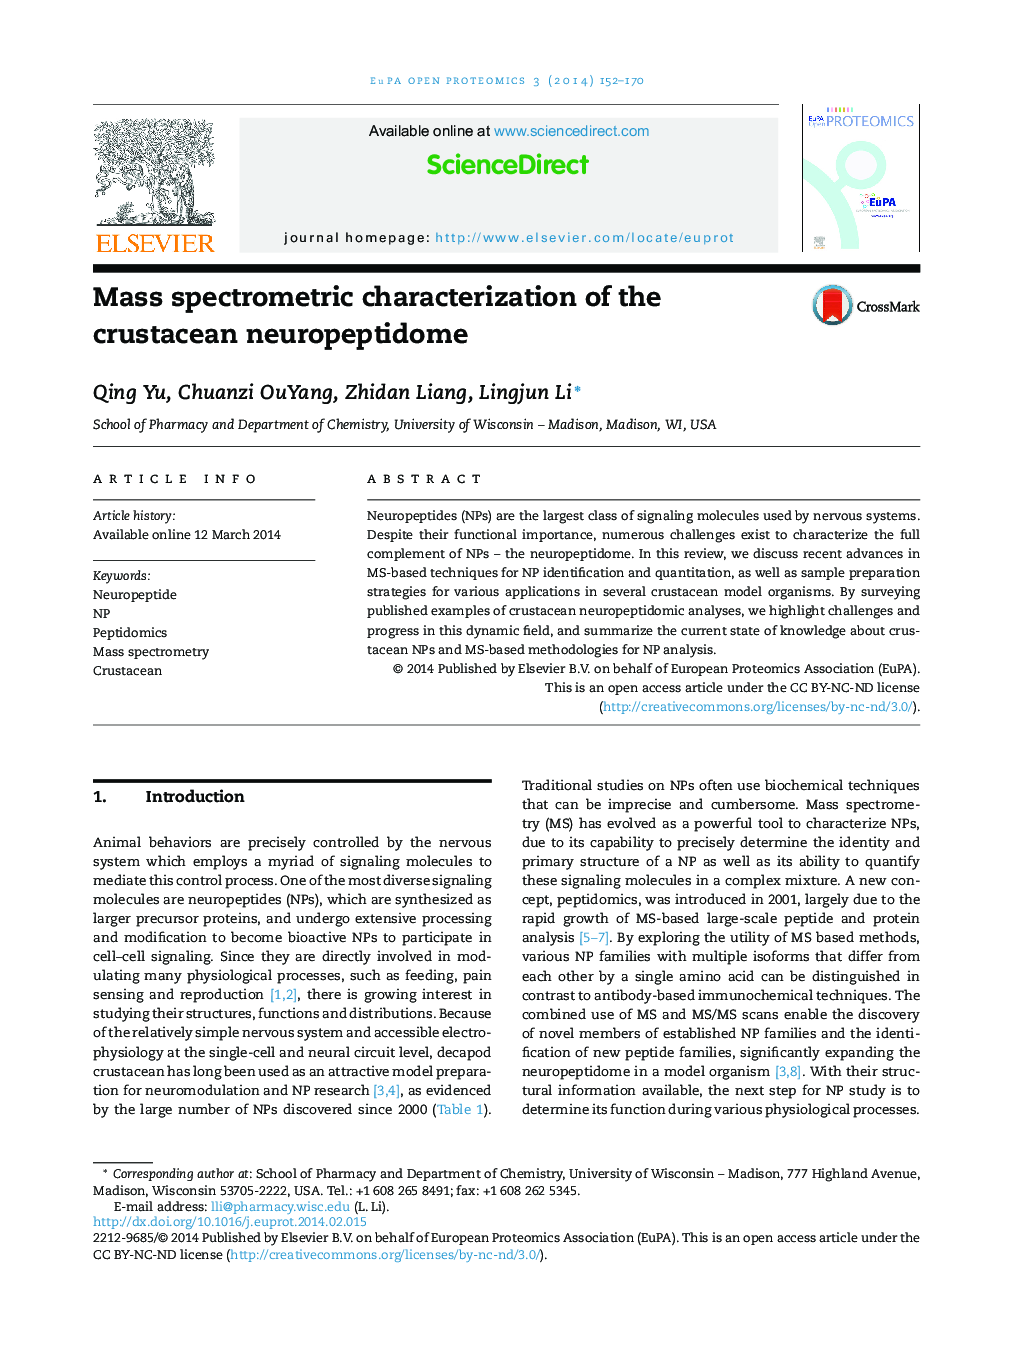 Mass spectrometric characterization of the crustacean neuropeptidome 